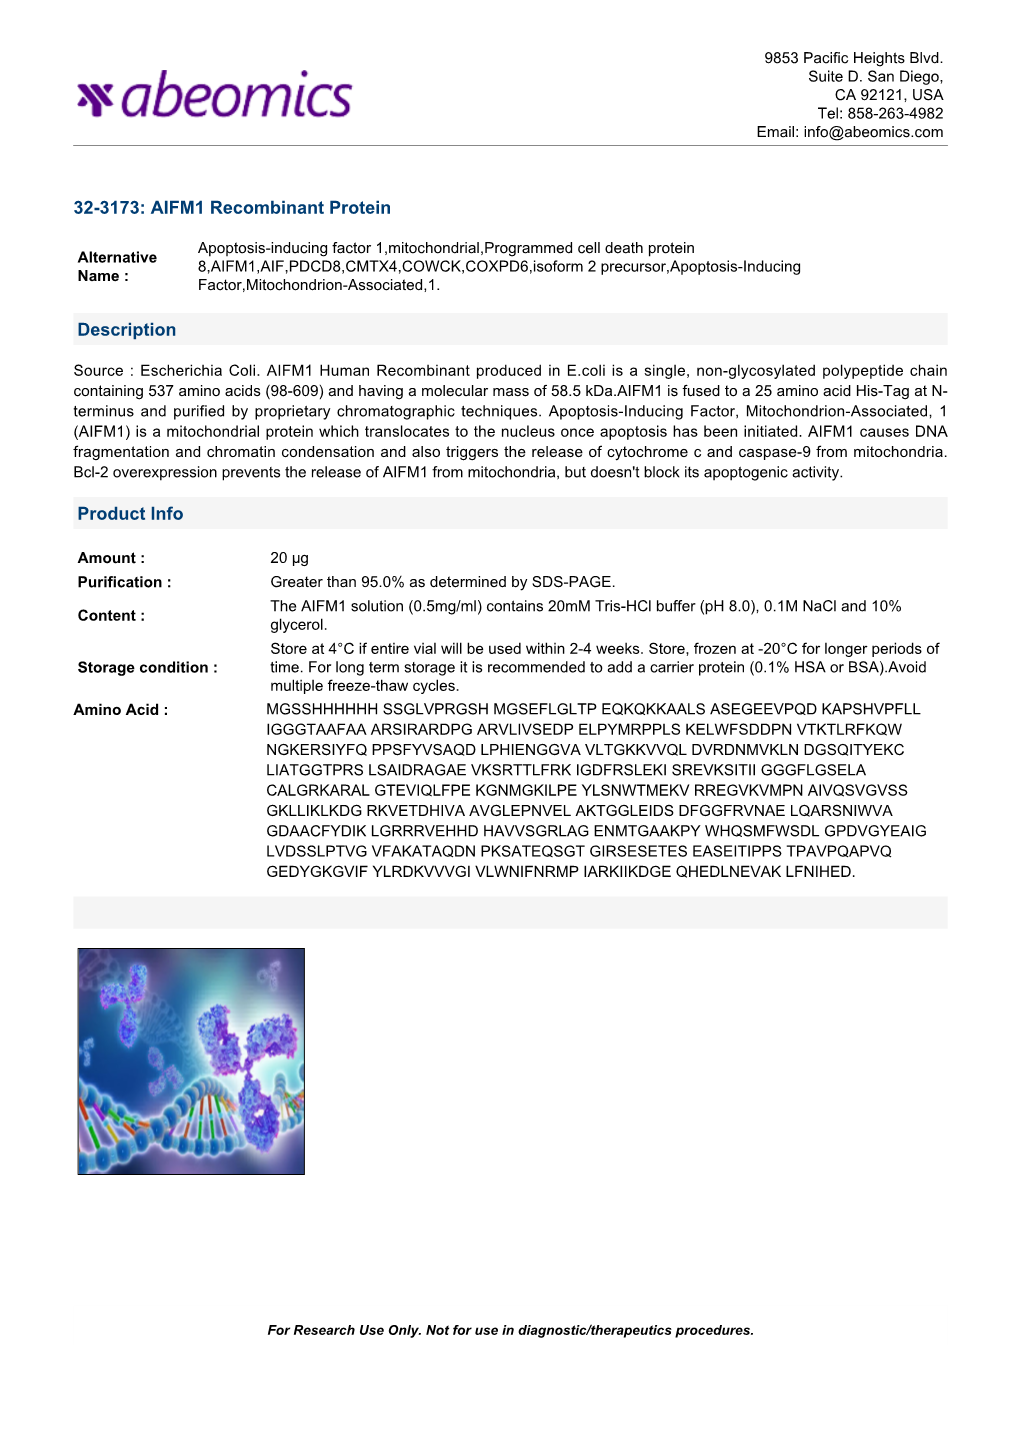 32-3173: AIFM1 Recombinant Protein Description Product Info